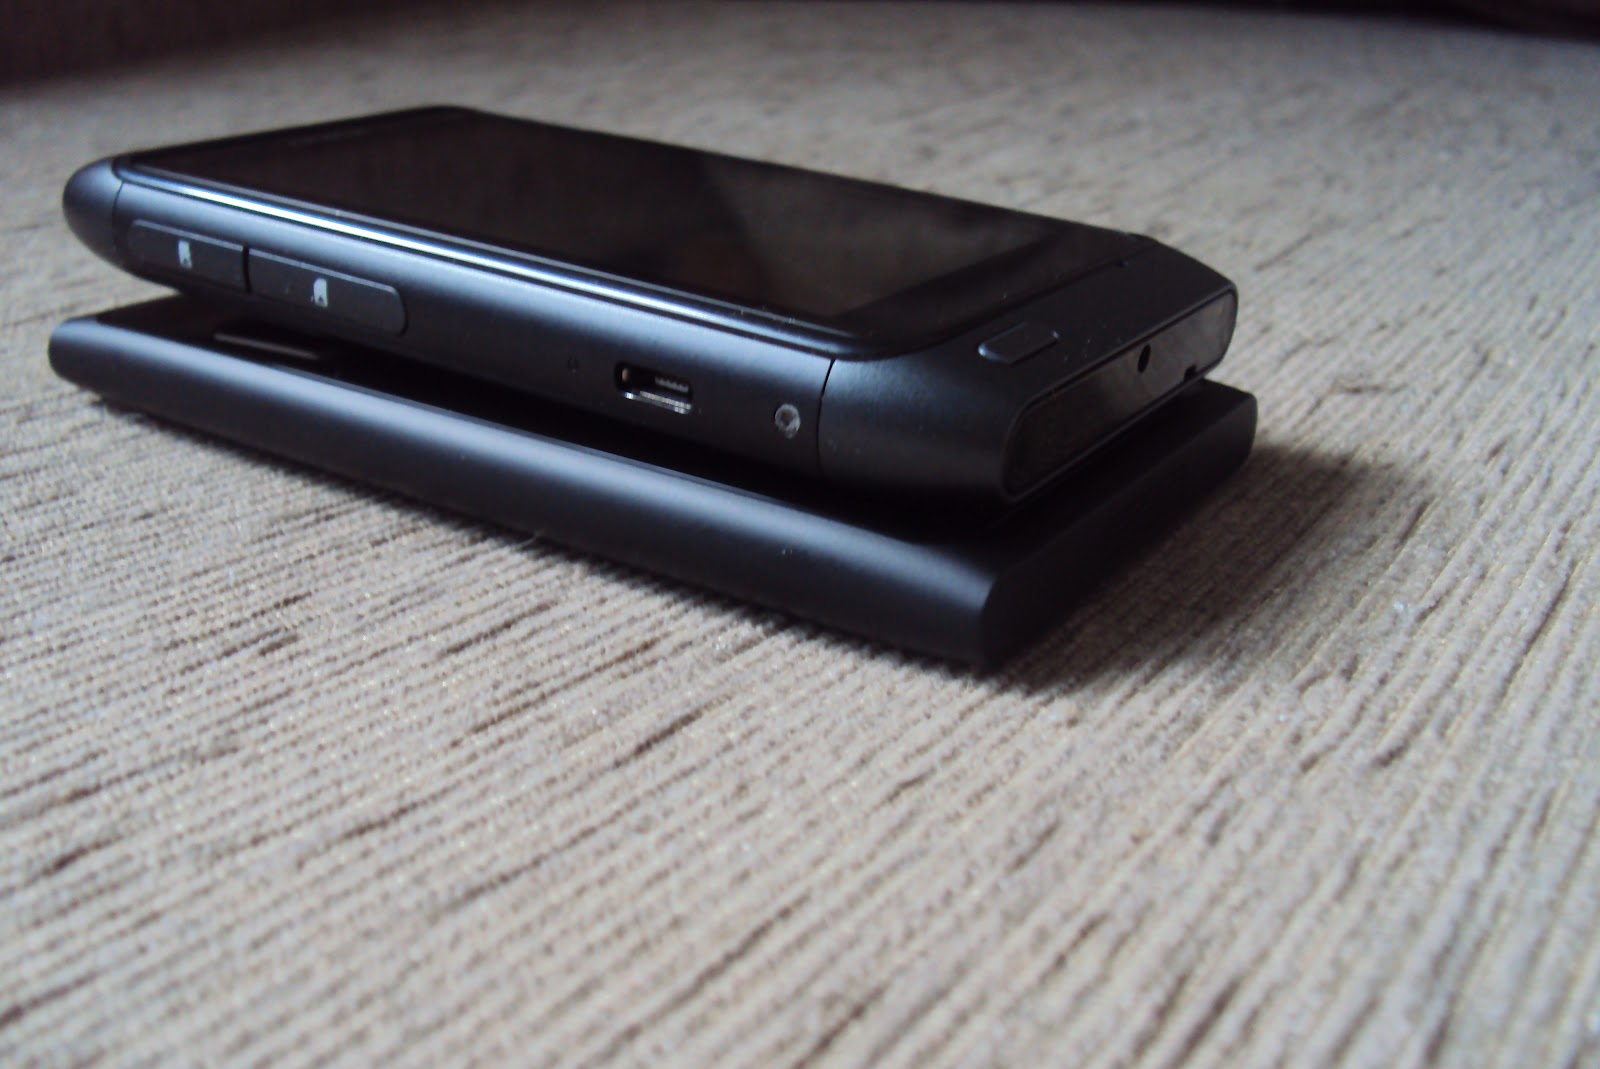 Galeria de fotos: Nokia N8 Black e Nokia Lumia 800 Black ~ Touch Nokia